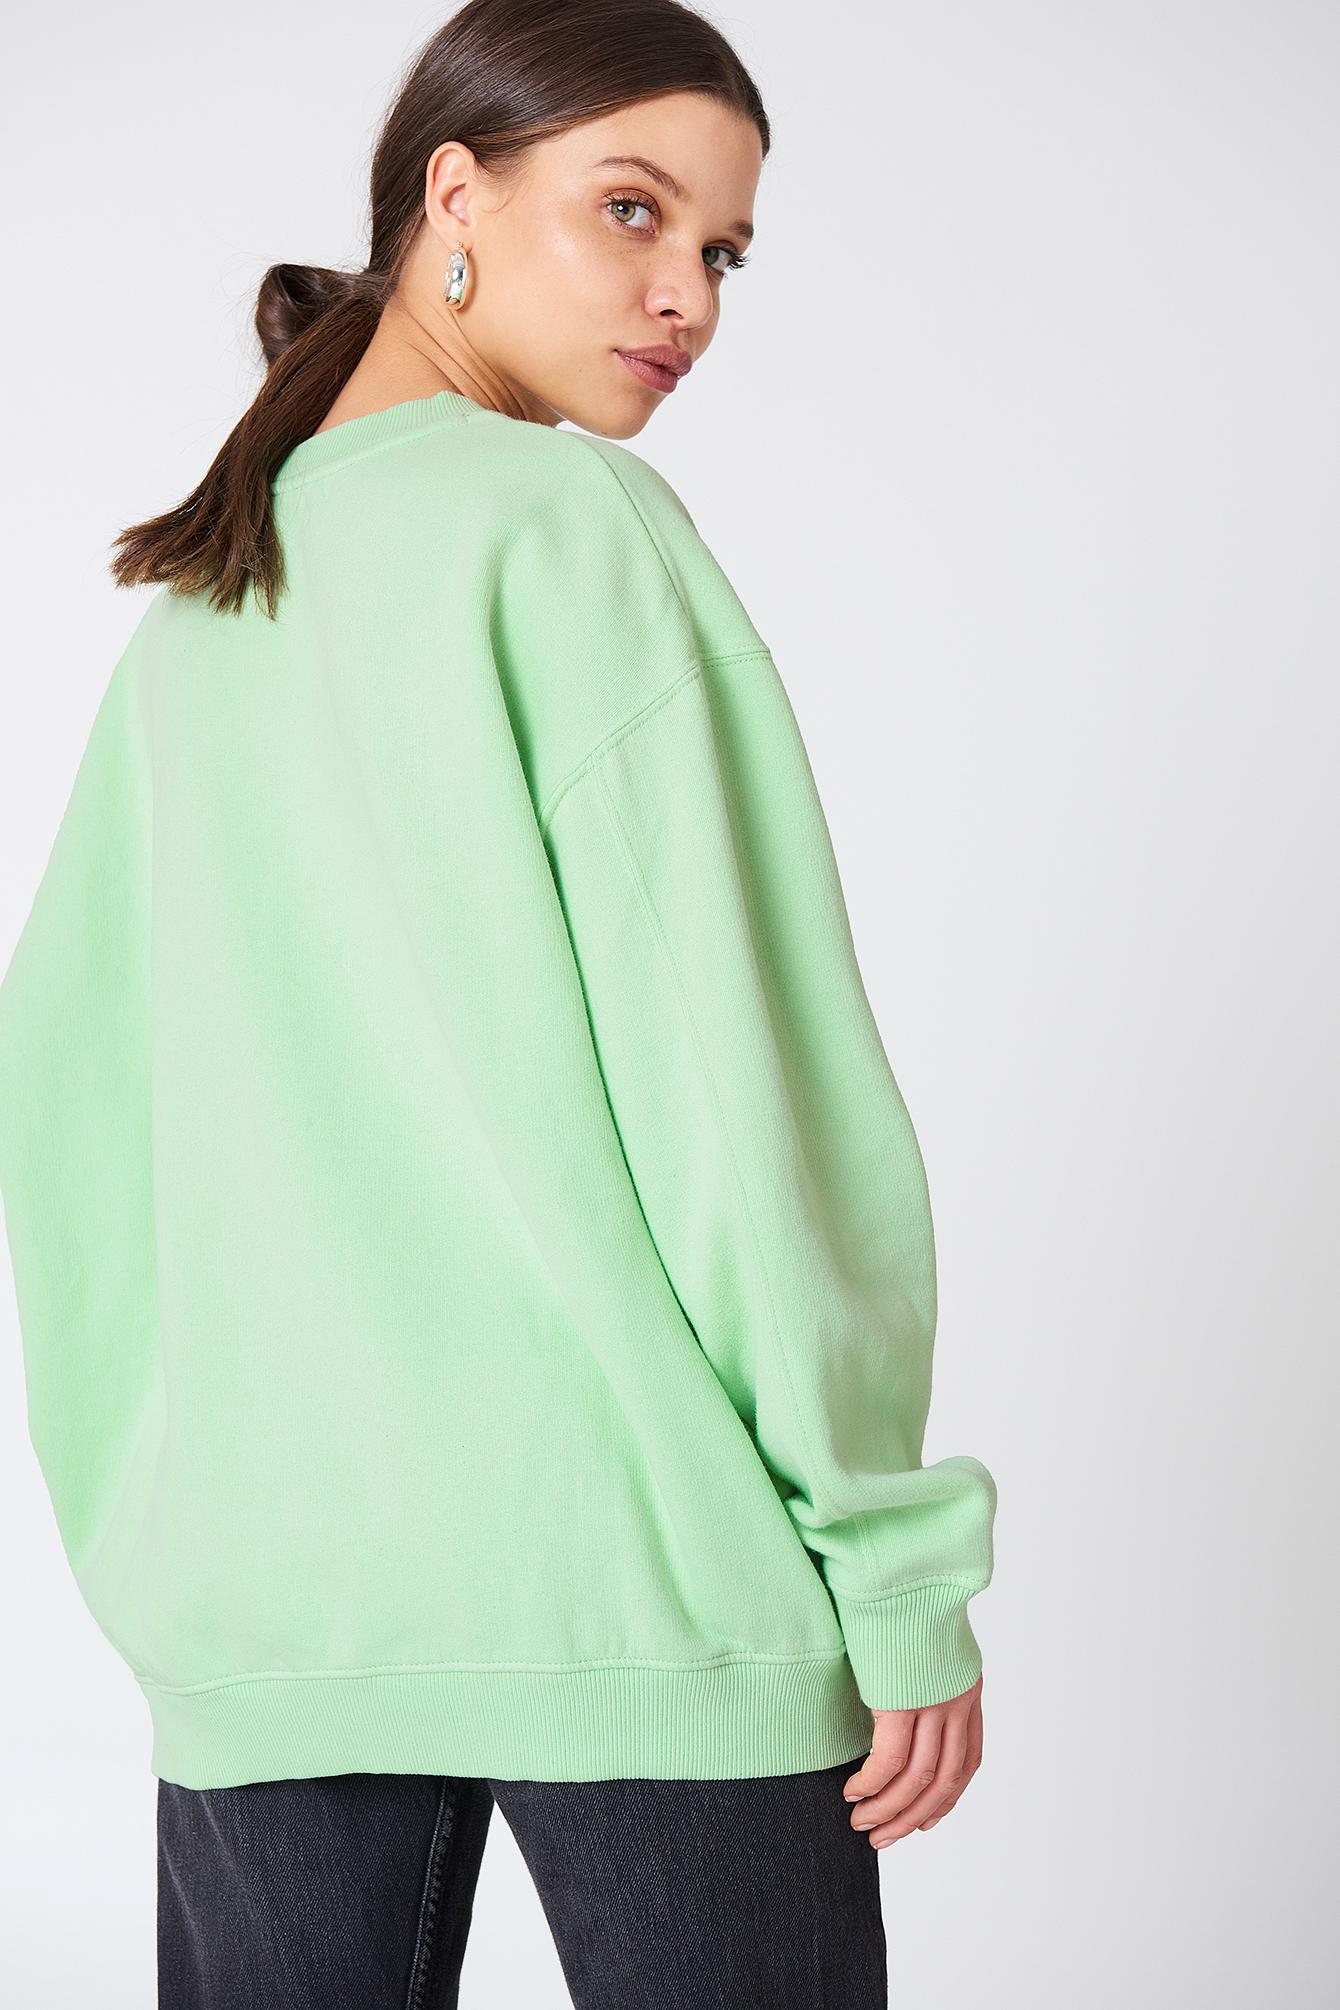 Calvin Klein Green Sweater Hotsell, 55% OFF 